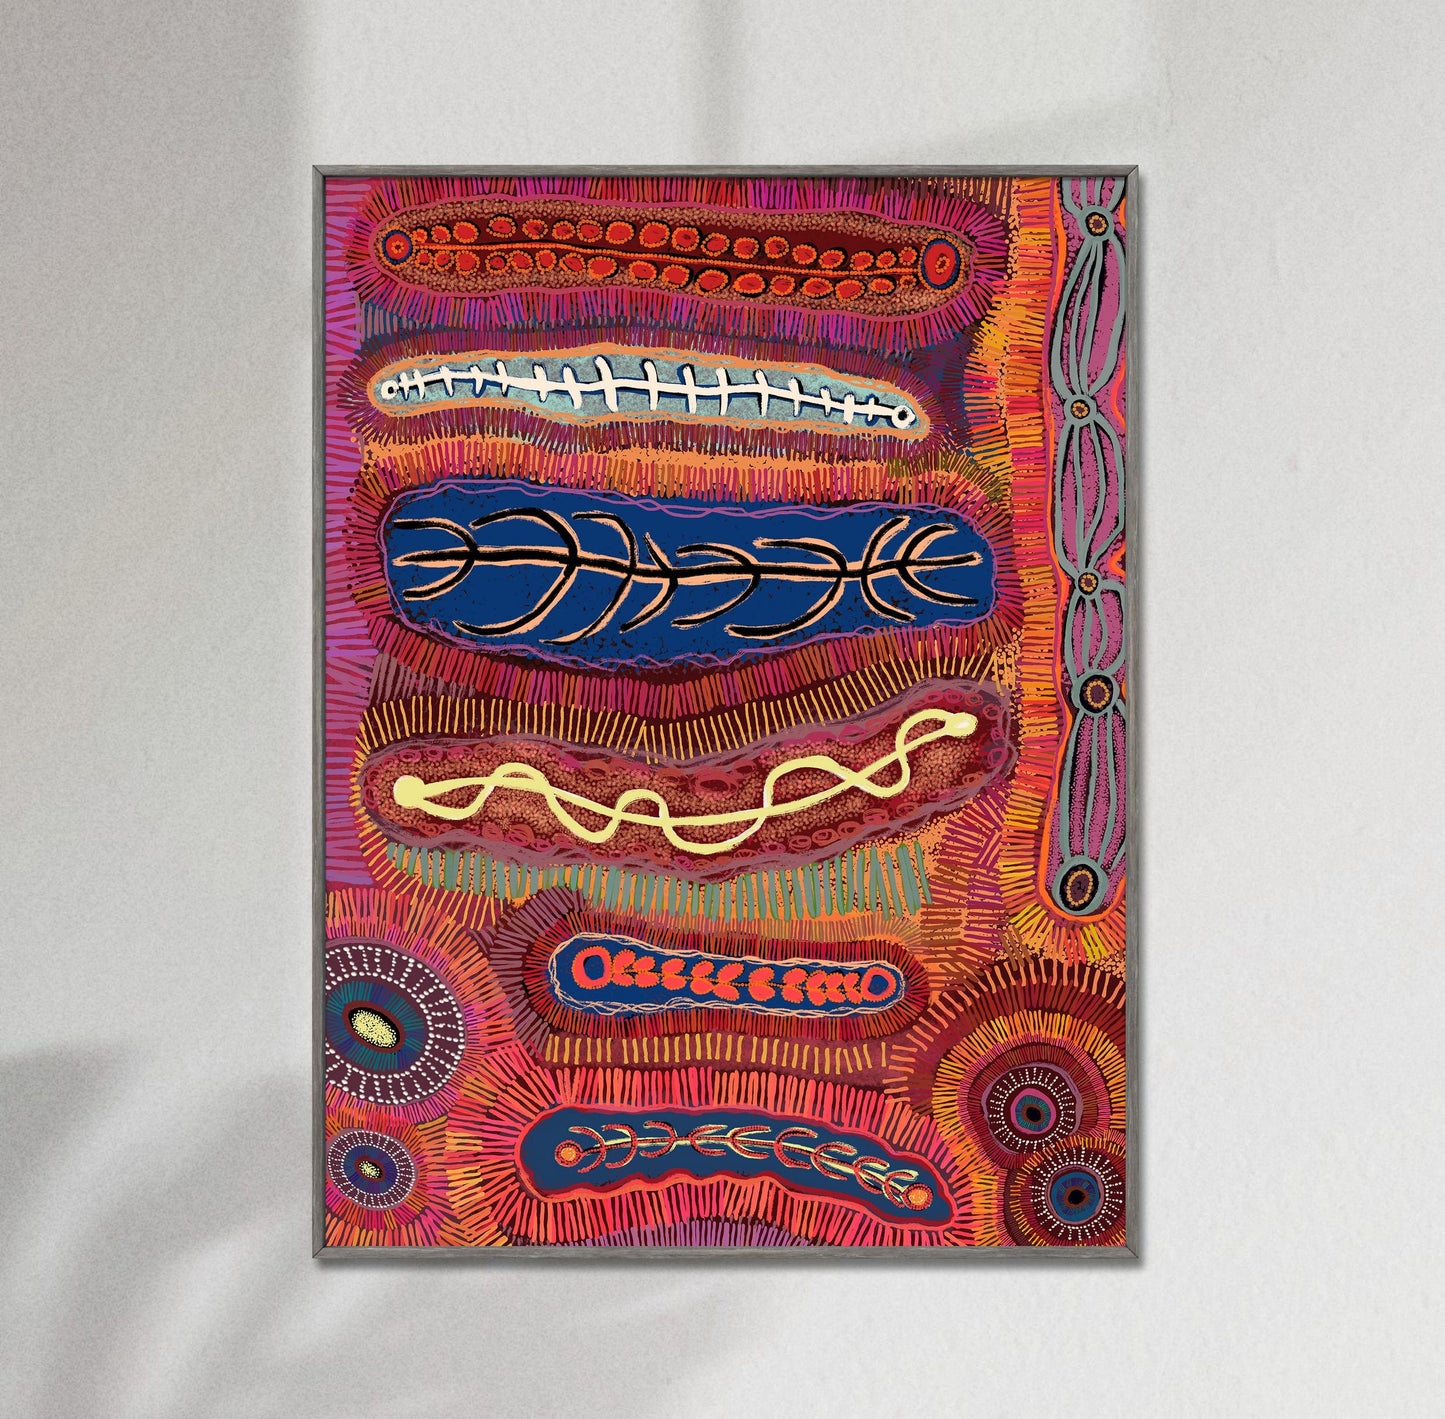 Australian Aboriginal Art Giclée Print, Prints For Wall Art, Watercolor Print, Wall Art, Abstract Watercolor Print, Modern Wall Décor